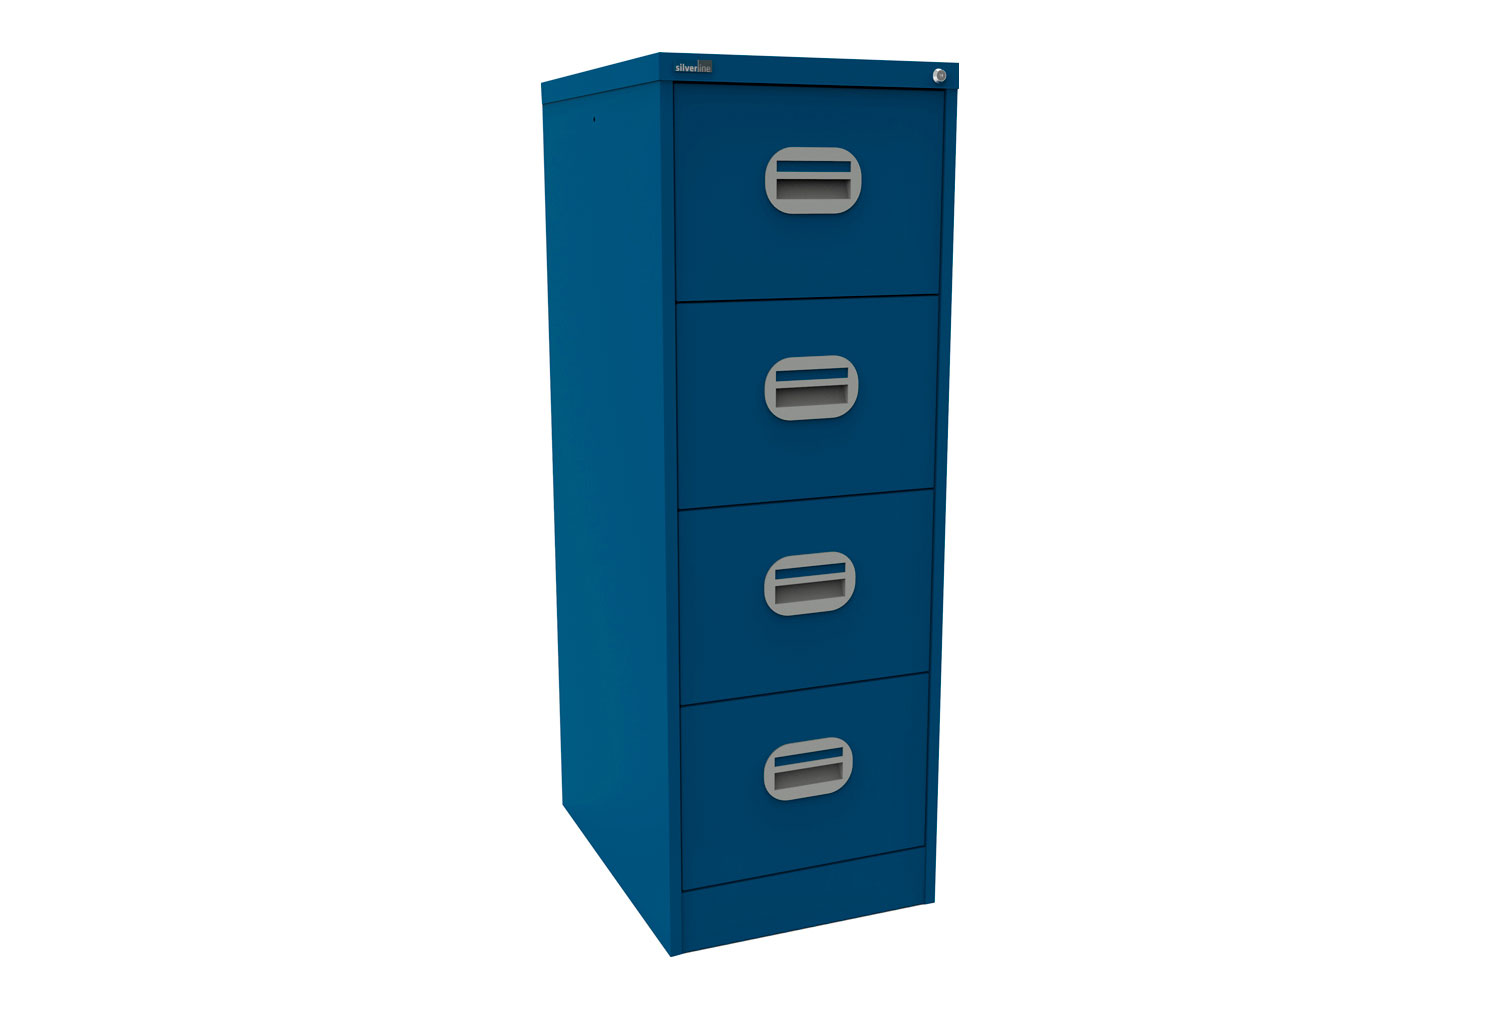 Silverline Kontrax 4 Drawer Filing Cabinet, 4 Drawer - 46wx62dx132h (cm), Blue